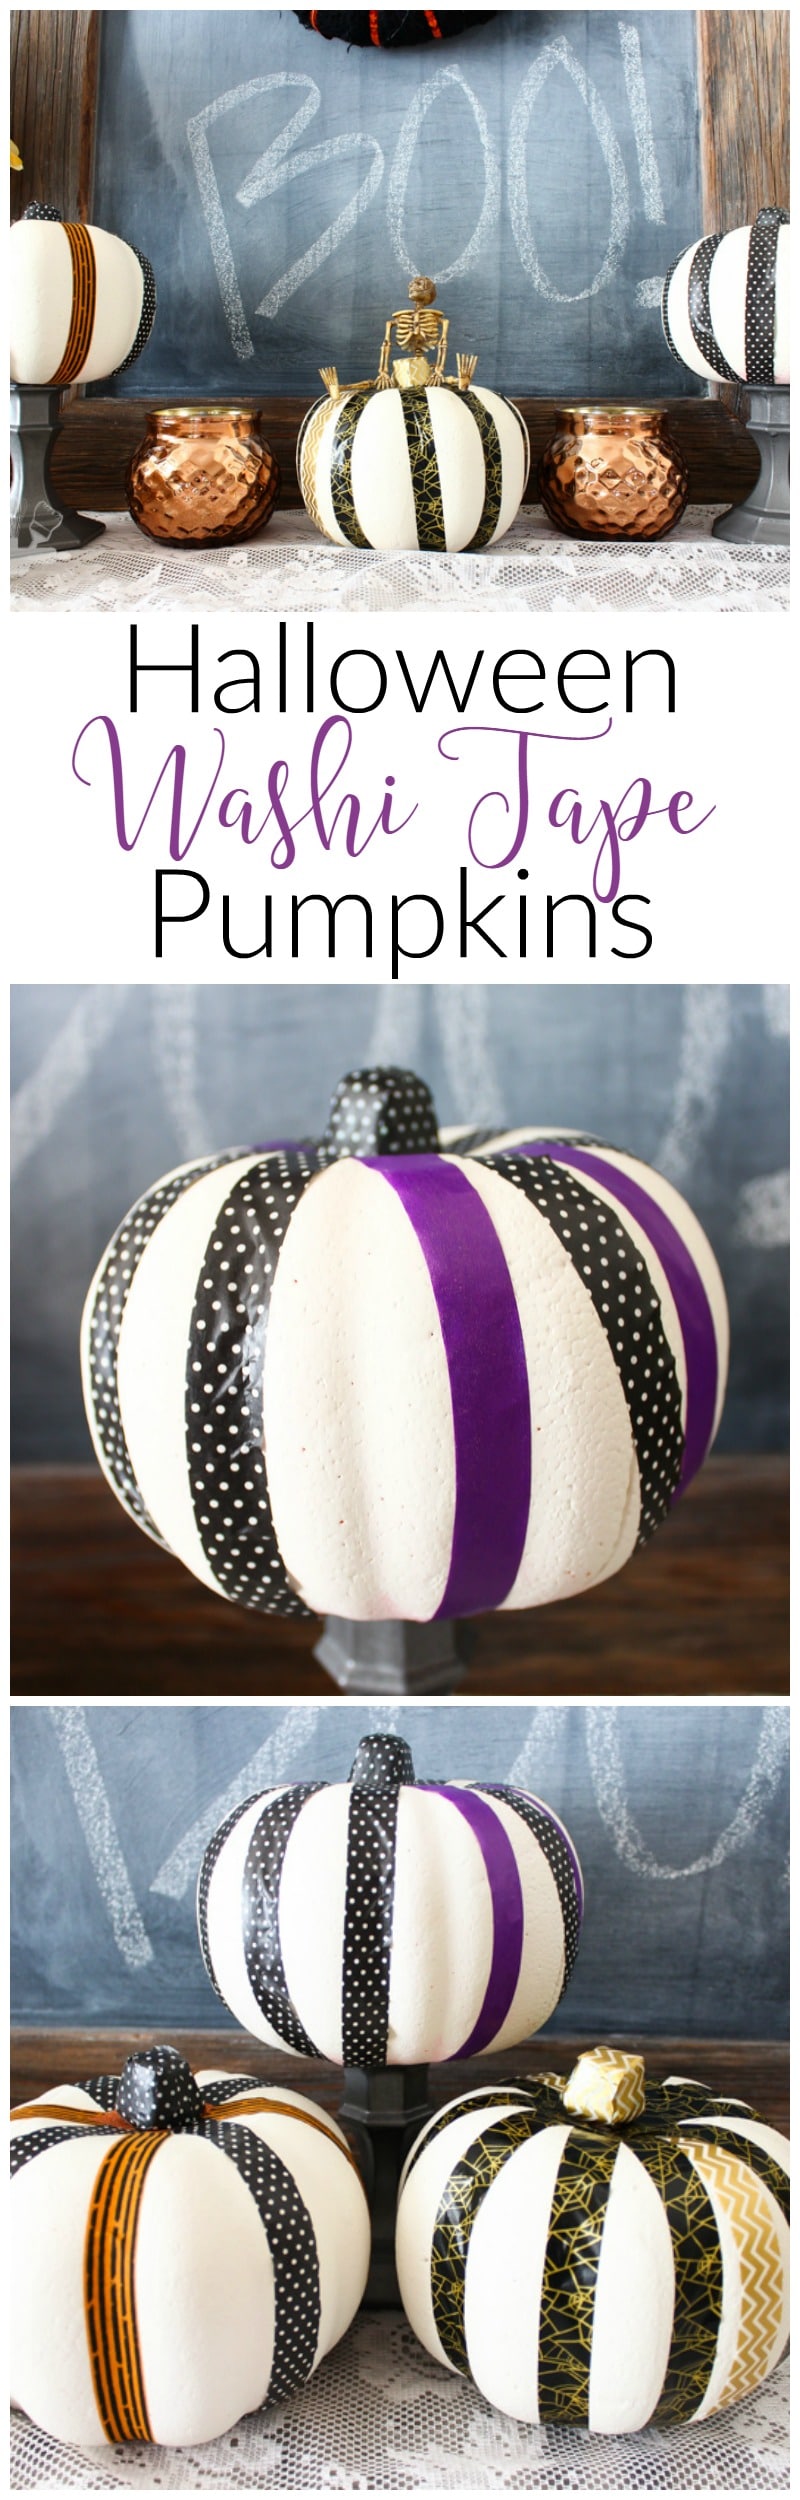 Washi Tape Pumpkins--such an EASY way to update Dollar Store craft pumpkins for Halloween